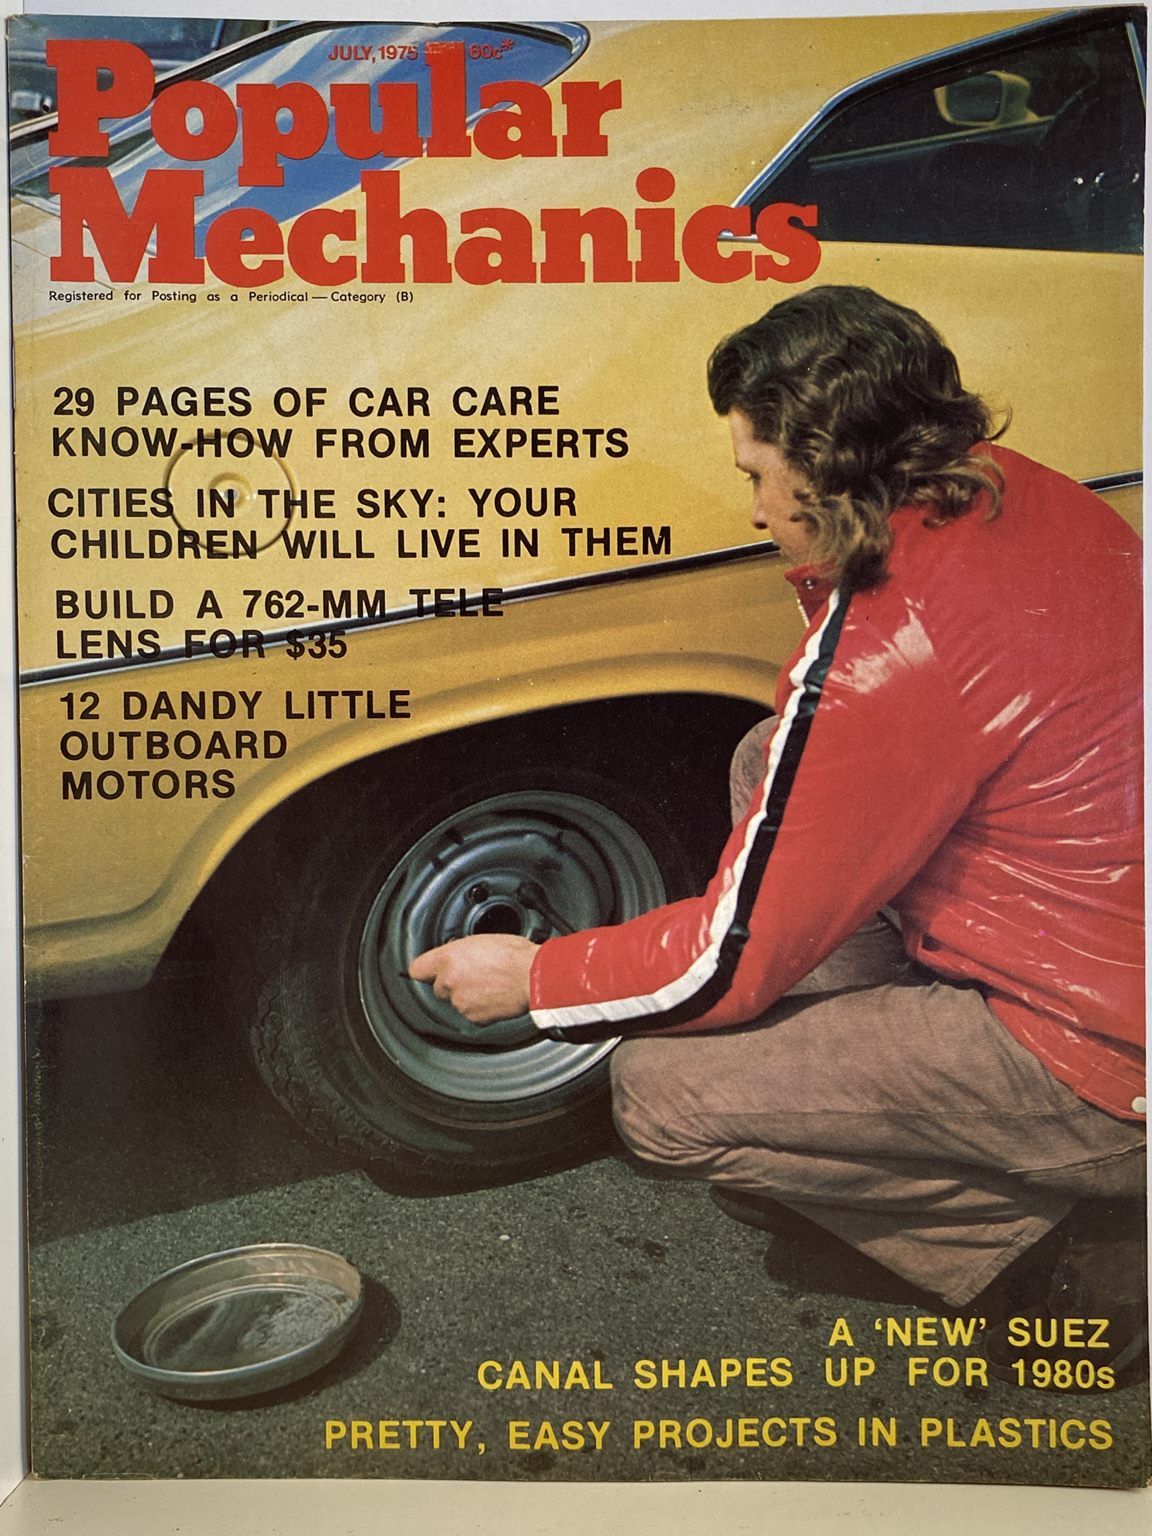 VINTAGE MAGAZINE: Popular Mechanics - Vol. 143, No. 5 - July 1975